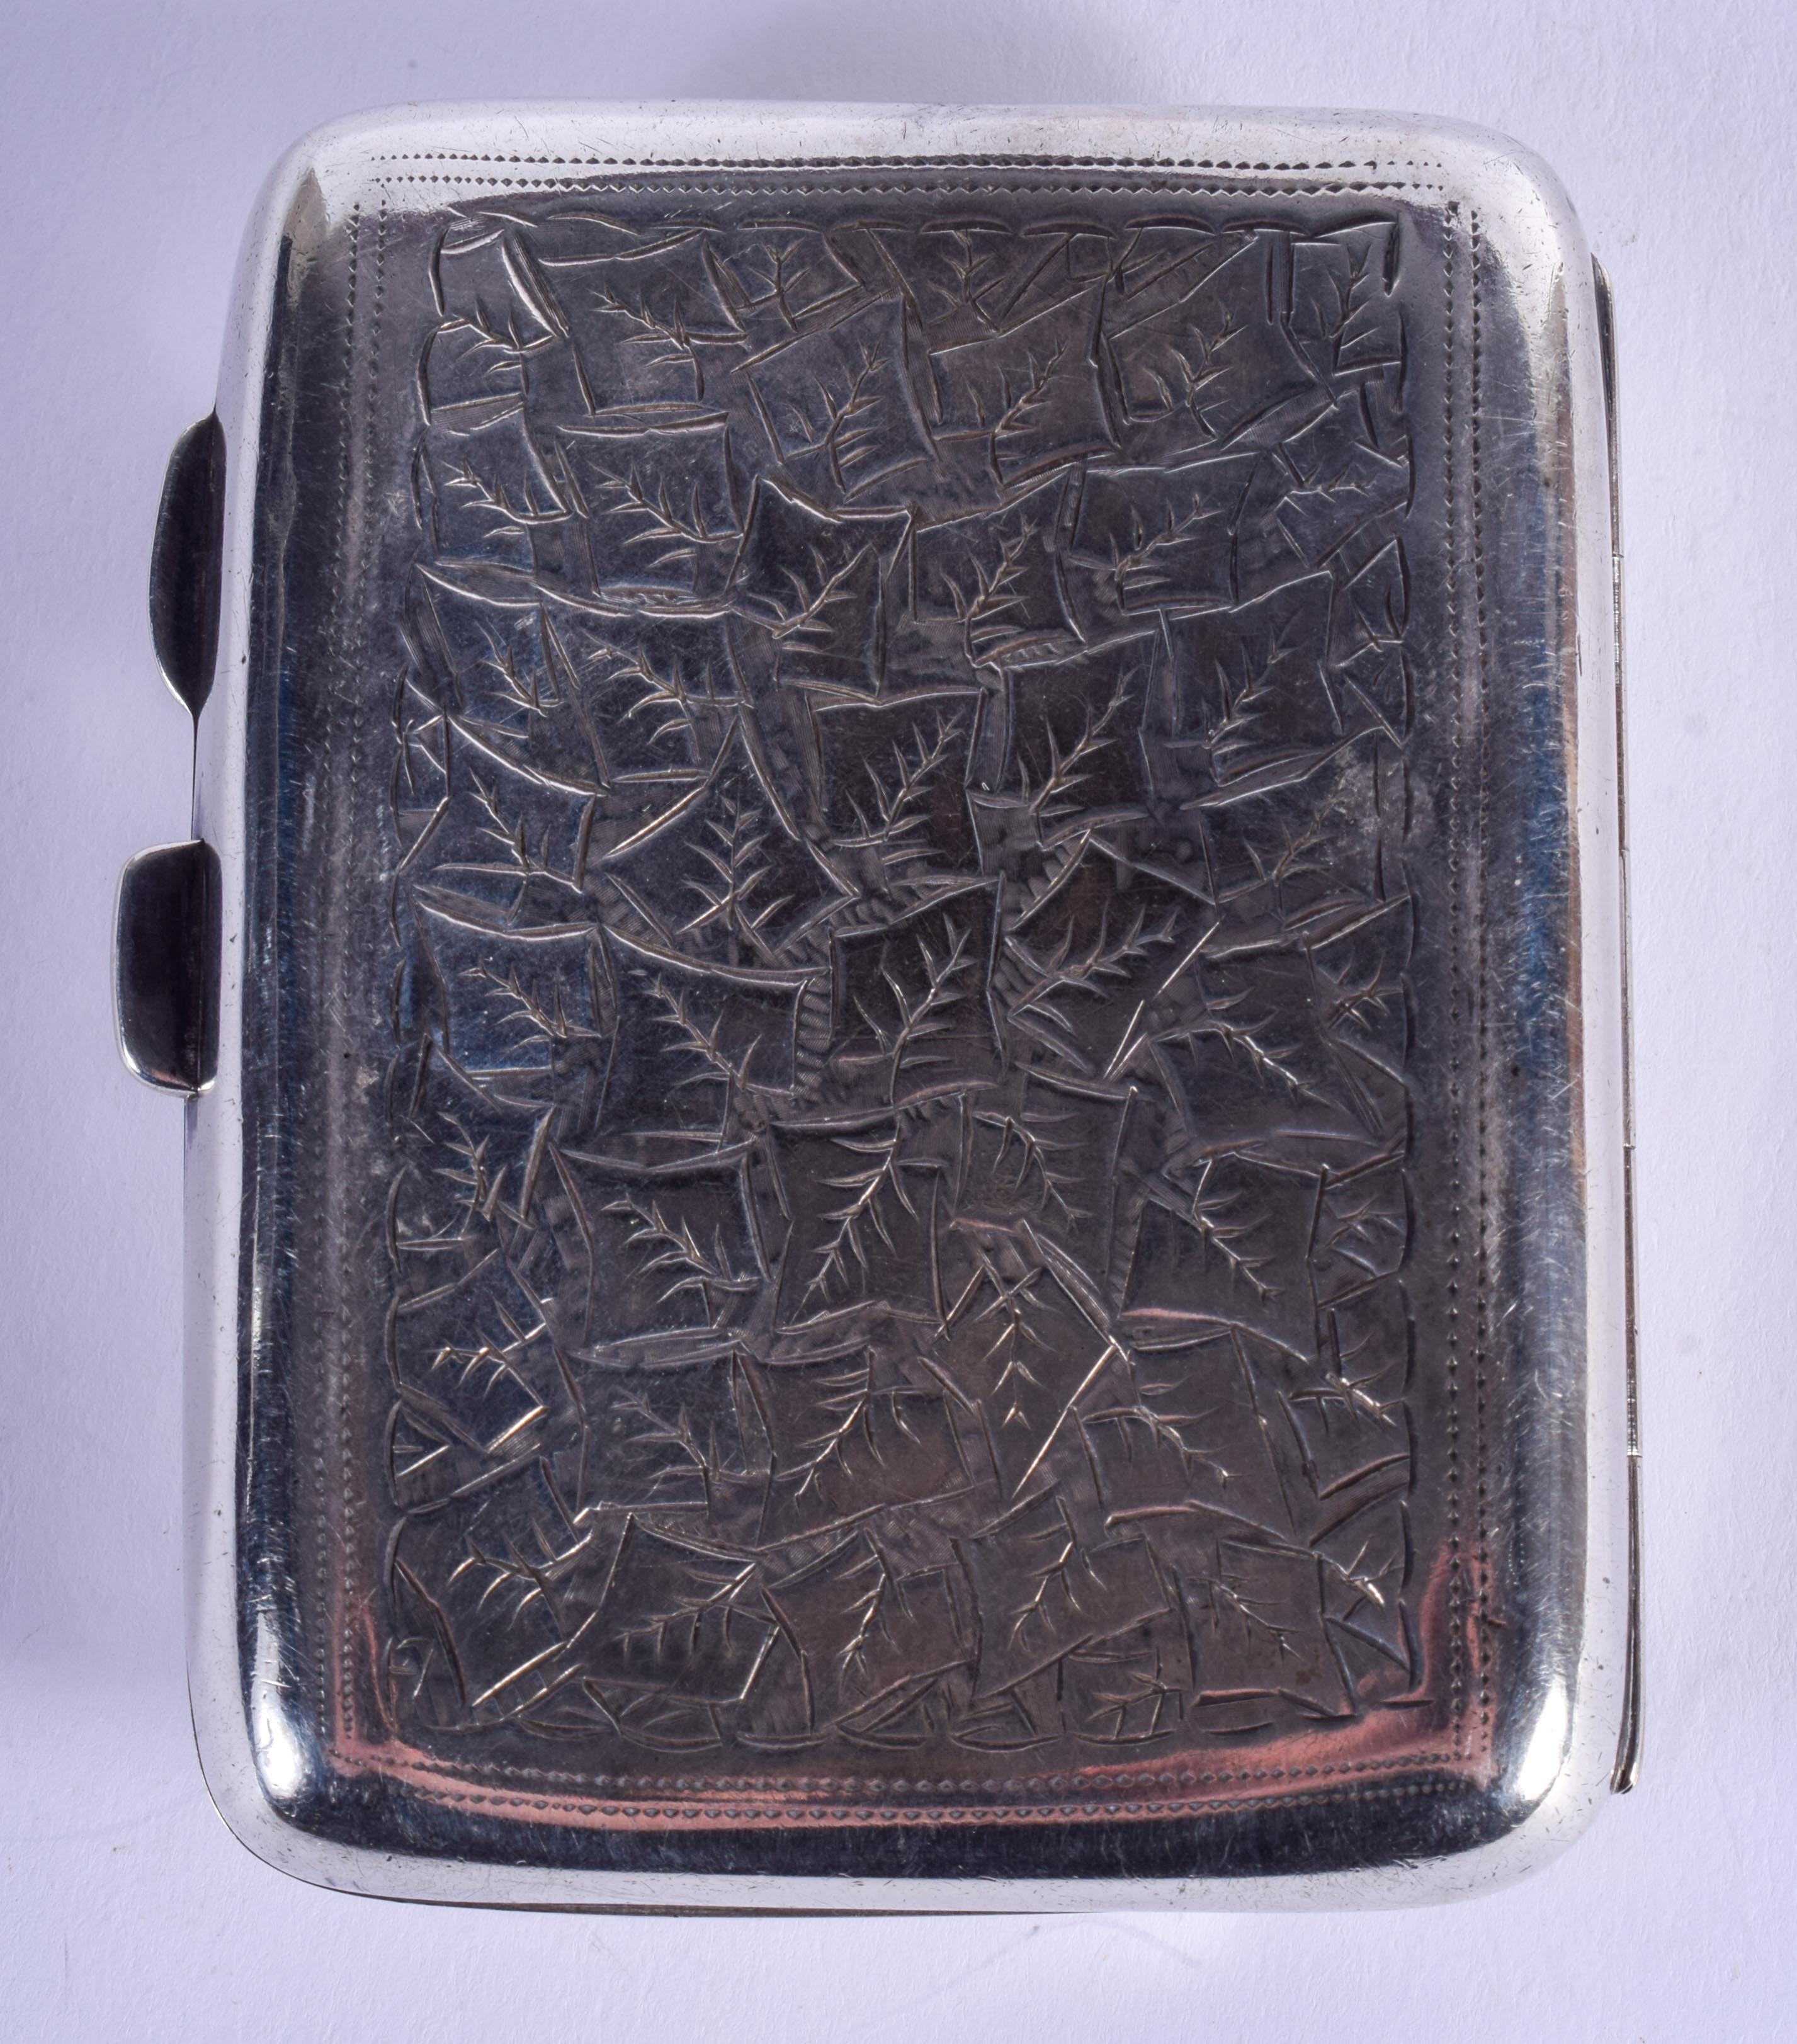 A SILVER AND ENAMEL CIGARETTE CASE. 122 grams. 8 cm x 10 cm. - Image 2 of 4